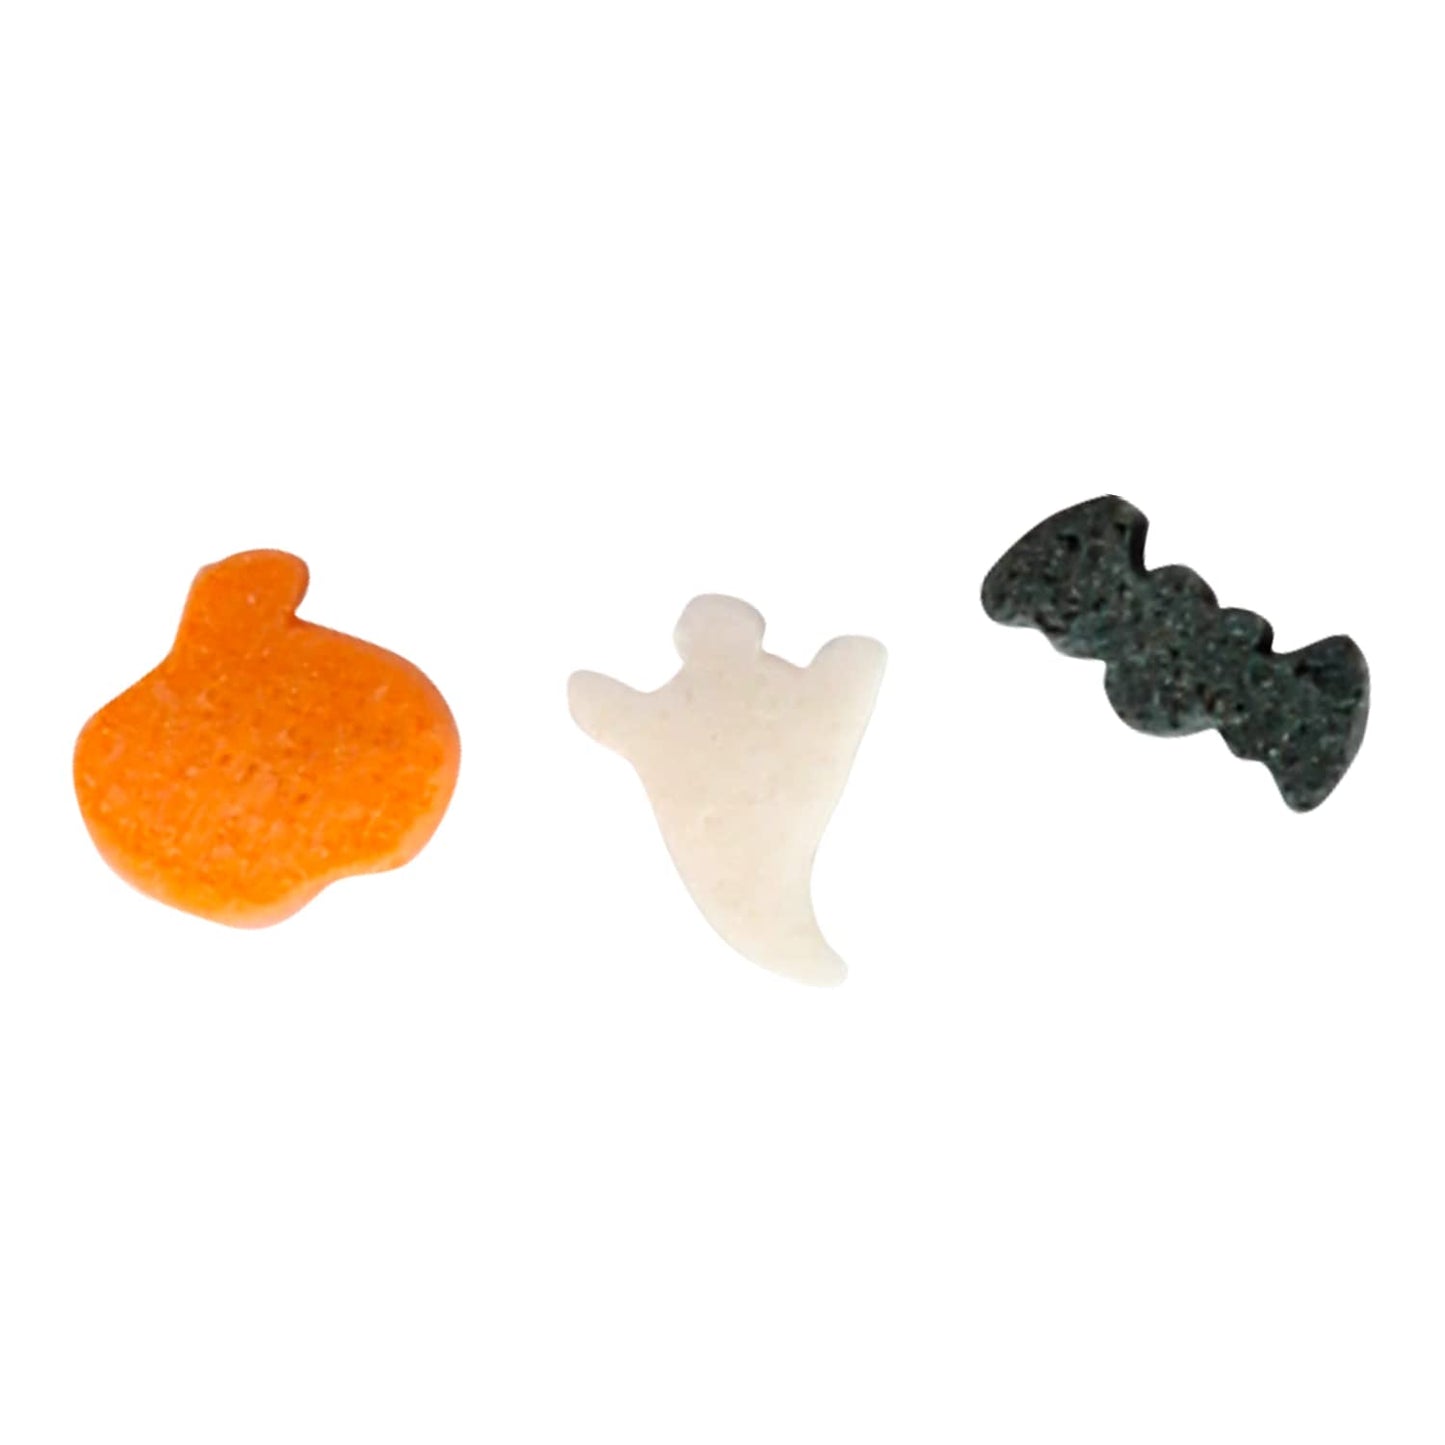 Halloween Confetti Sprinkles - 10 ounces - Ghost Bat Pumpkin Quins - Spooky Dessert Topping Mix